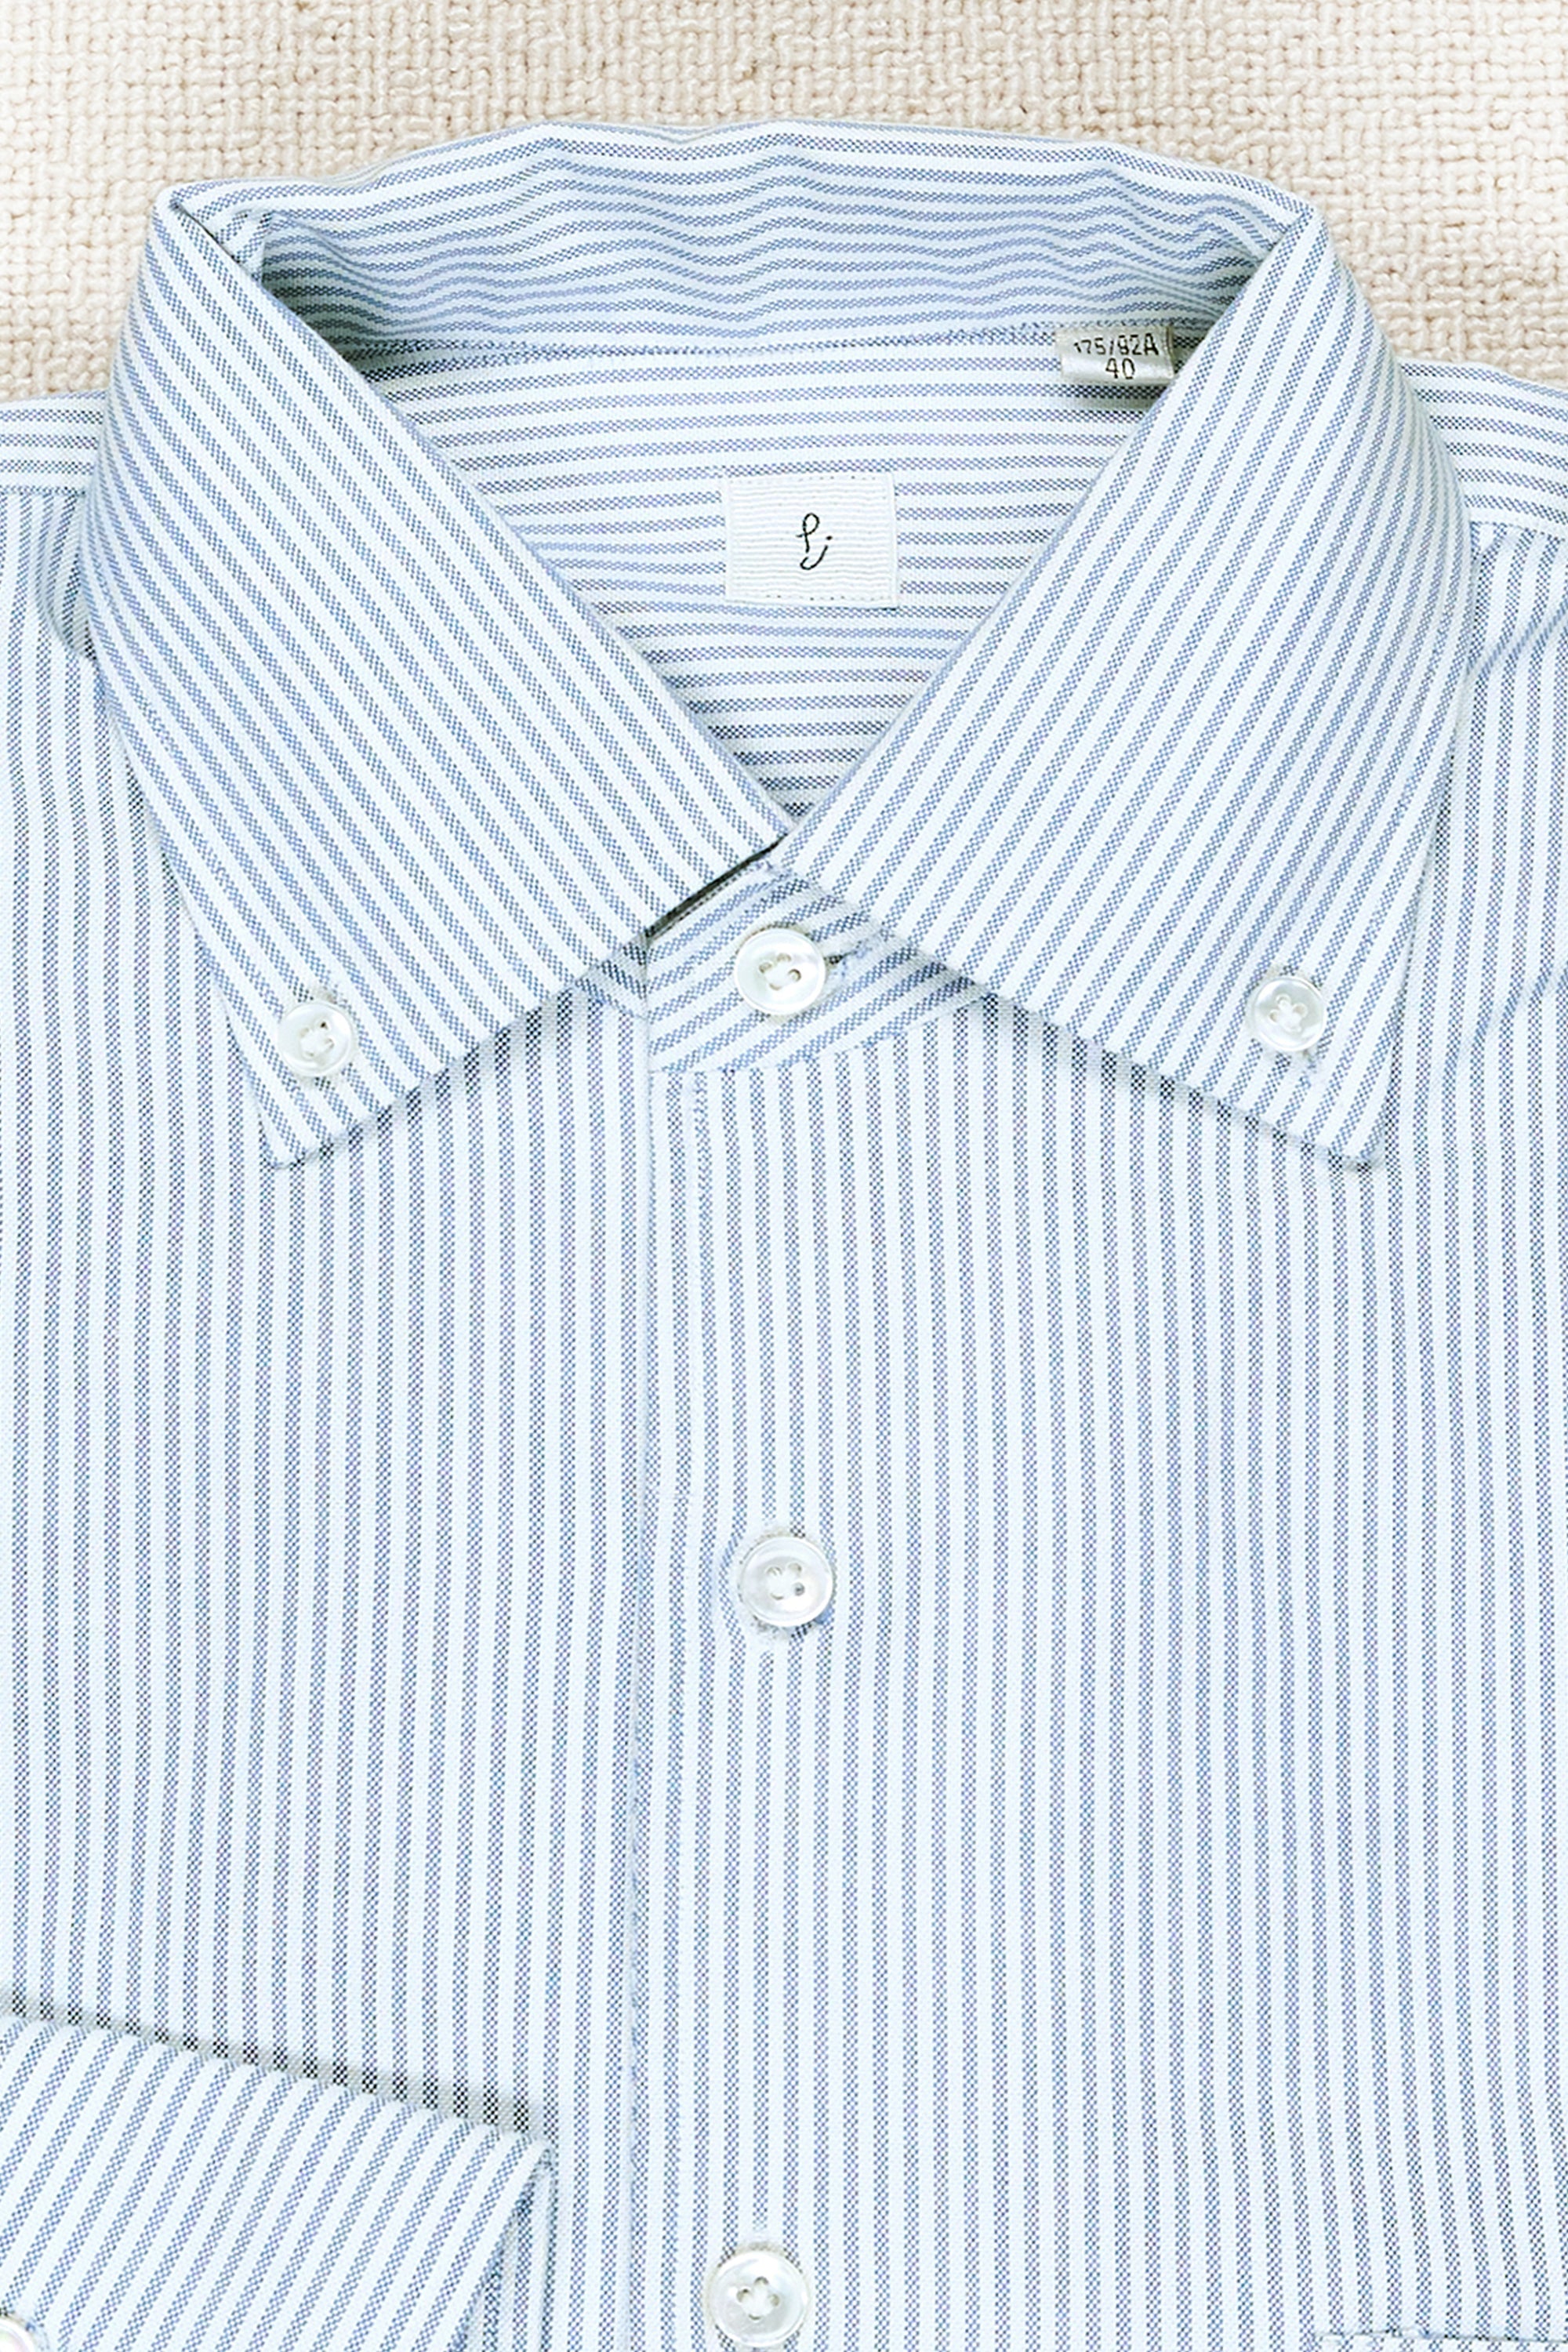 P. Johnson Navy/White Stripe Cotton Button Down Shirt